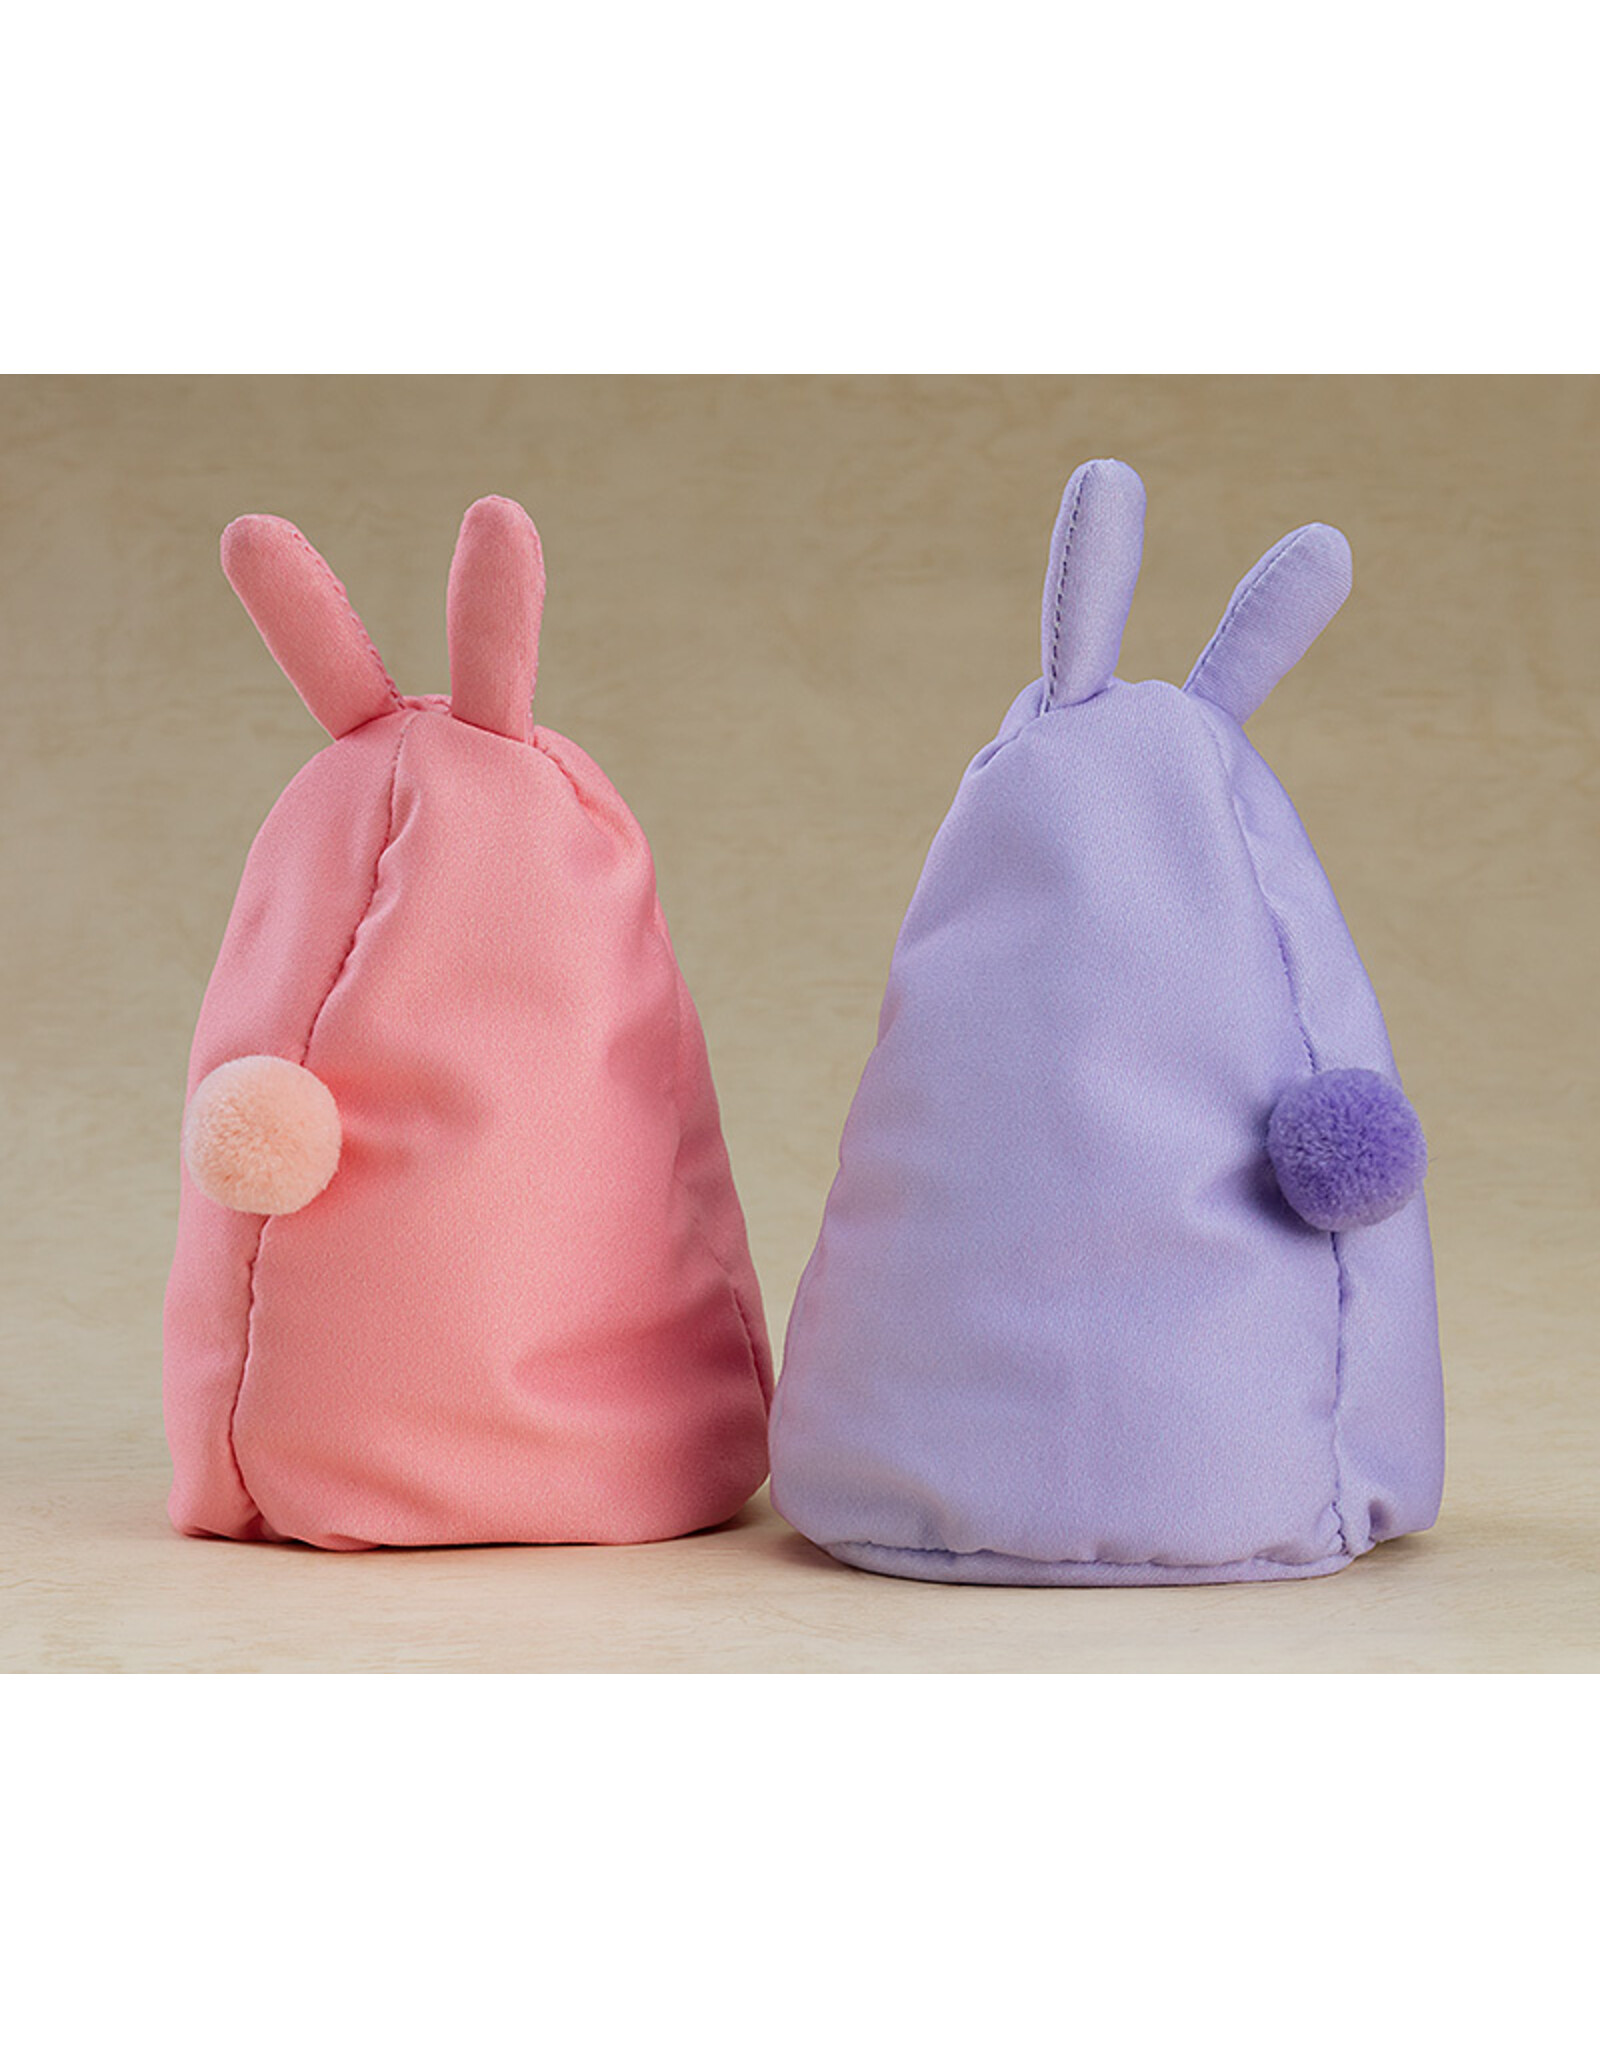 Nendoroid More Bean Bag Chair Pink Rabbit Ver.